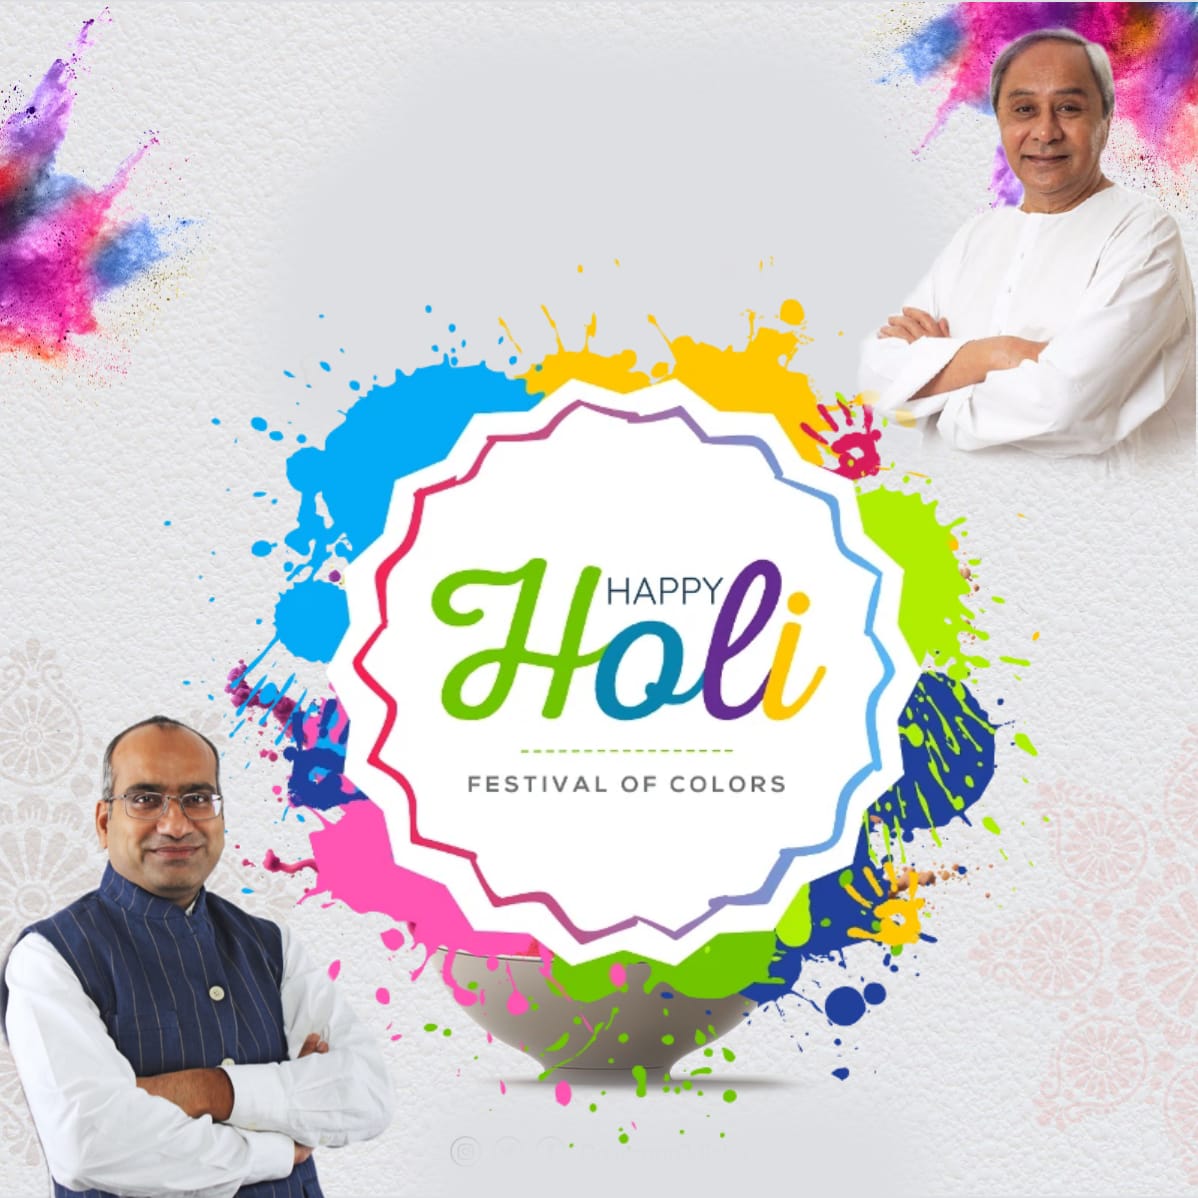 ରଙ୍ଗ ଓ ଭାଇଚାରାର ପର୍ବ ପବିତ୍ର ହୋଲି ଉପଲକ୍ଷେ ସମସ୍ତଙ୍କୁ ହାର୍ଦ୍ଦିକ ଶୁଭେଚ୍ଛା ଓ ଅଭିନନ୍ଦନ। Wishing everyone a very Happy & Colourful #Holi. #HappyHoli